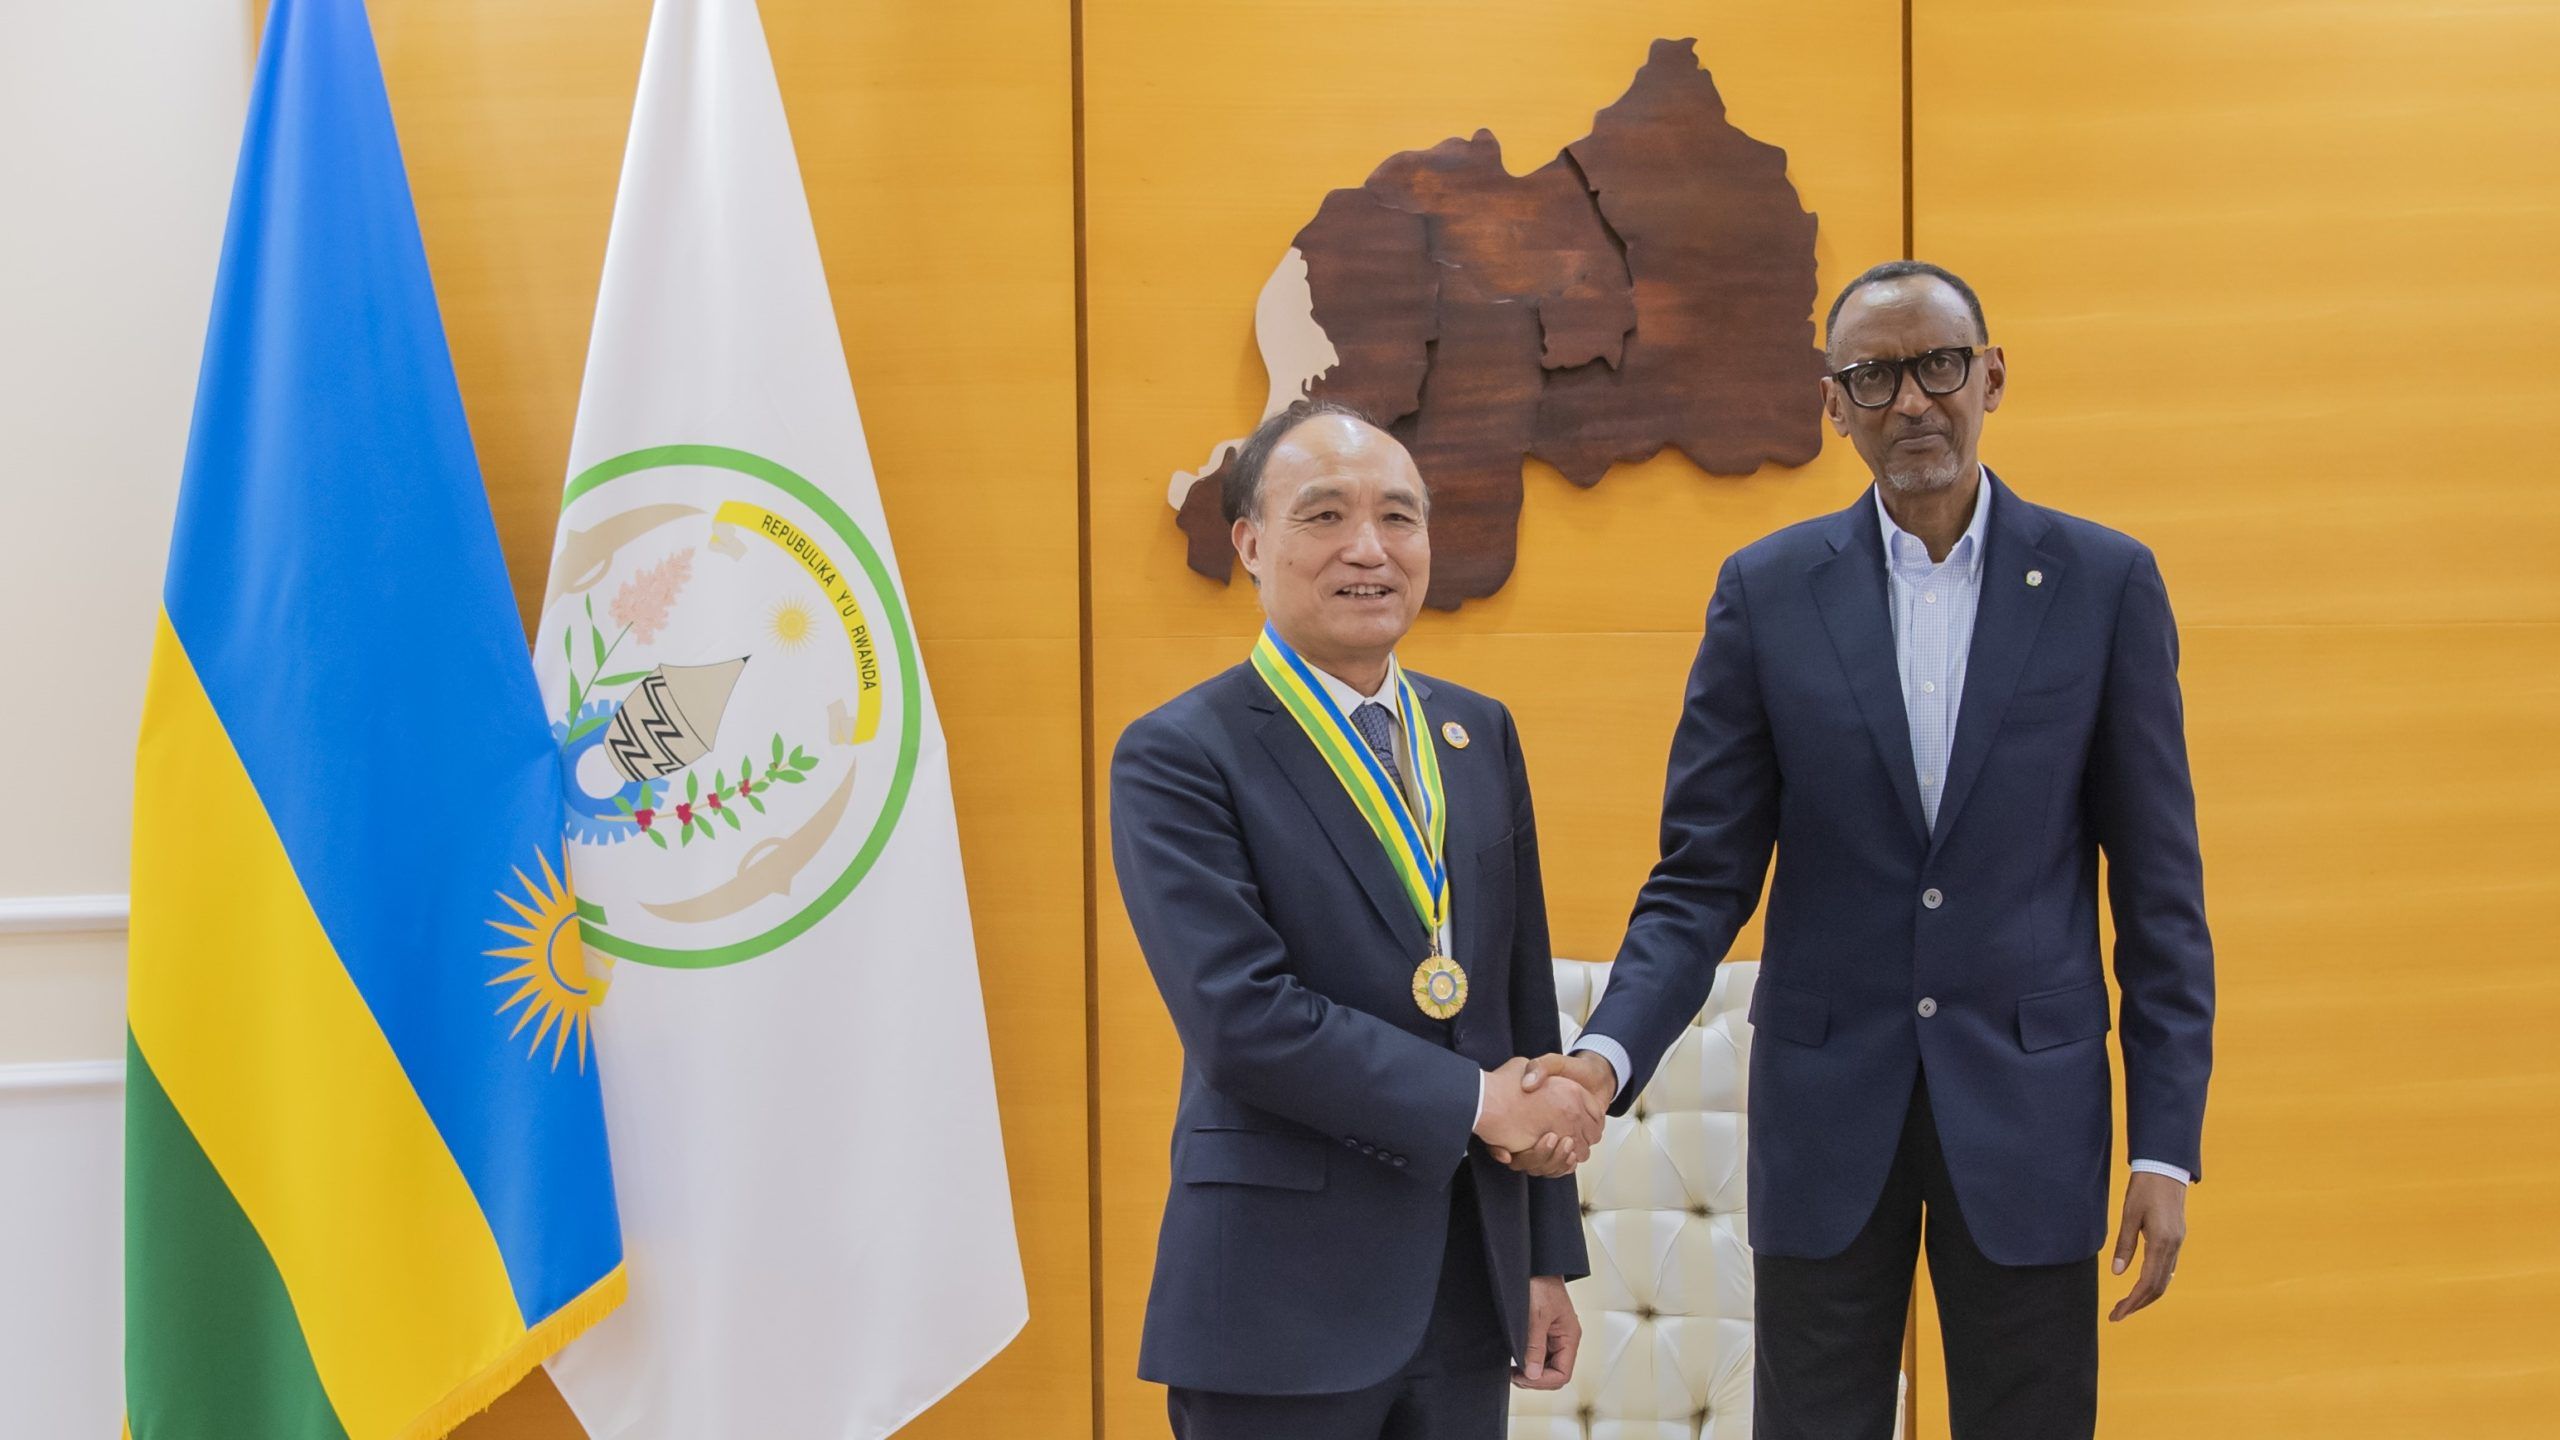 ITU Secretary-General receives Rwandan national honour medal featured image